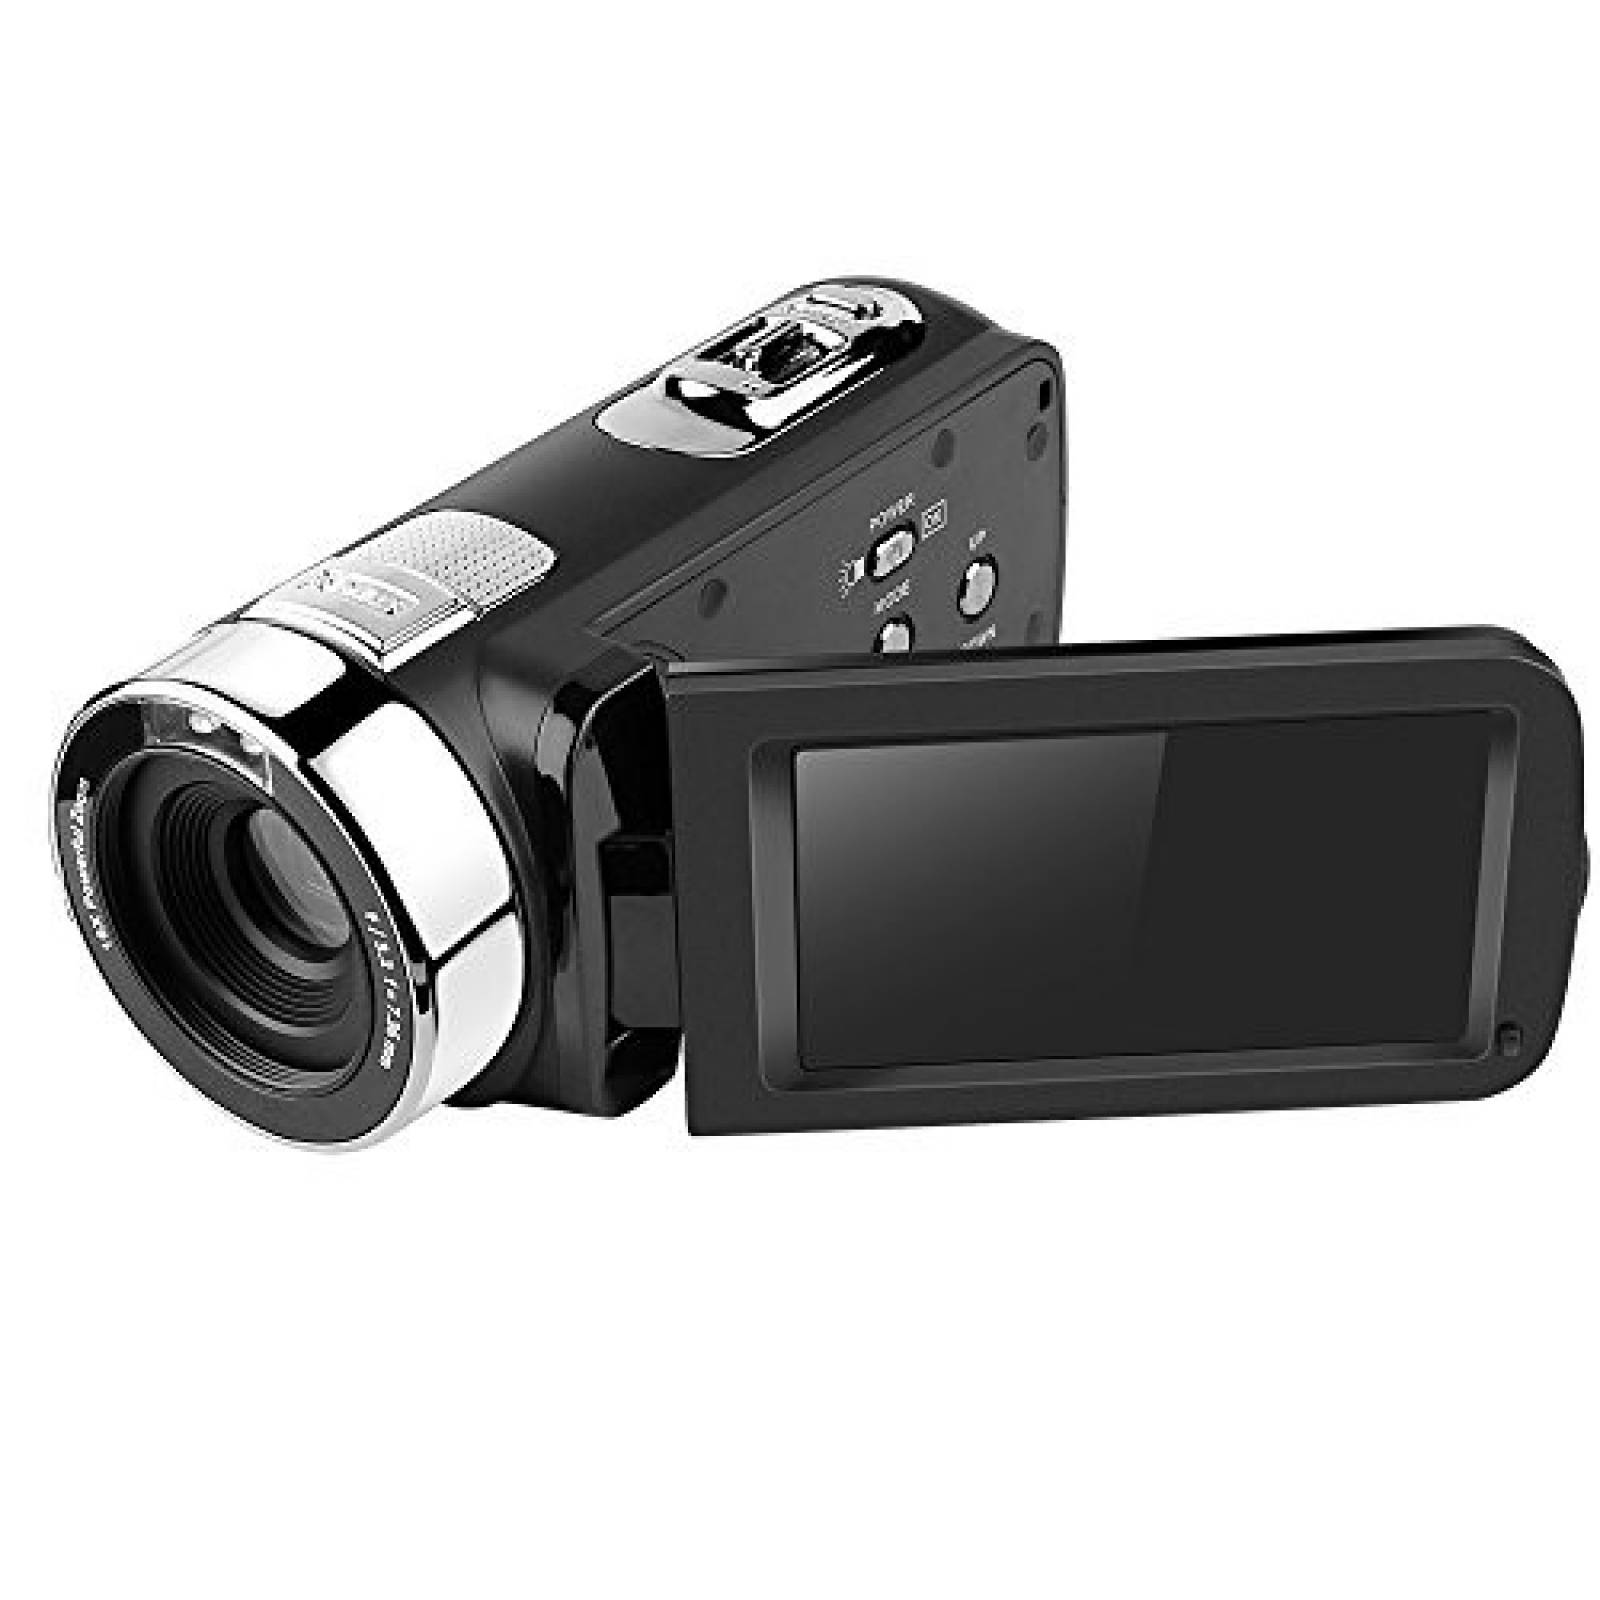 Videocámara digital Dotca RV02 FHD DV visión nocturna -negra